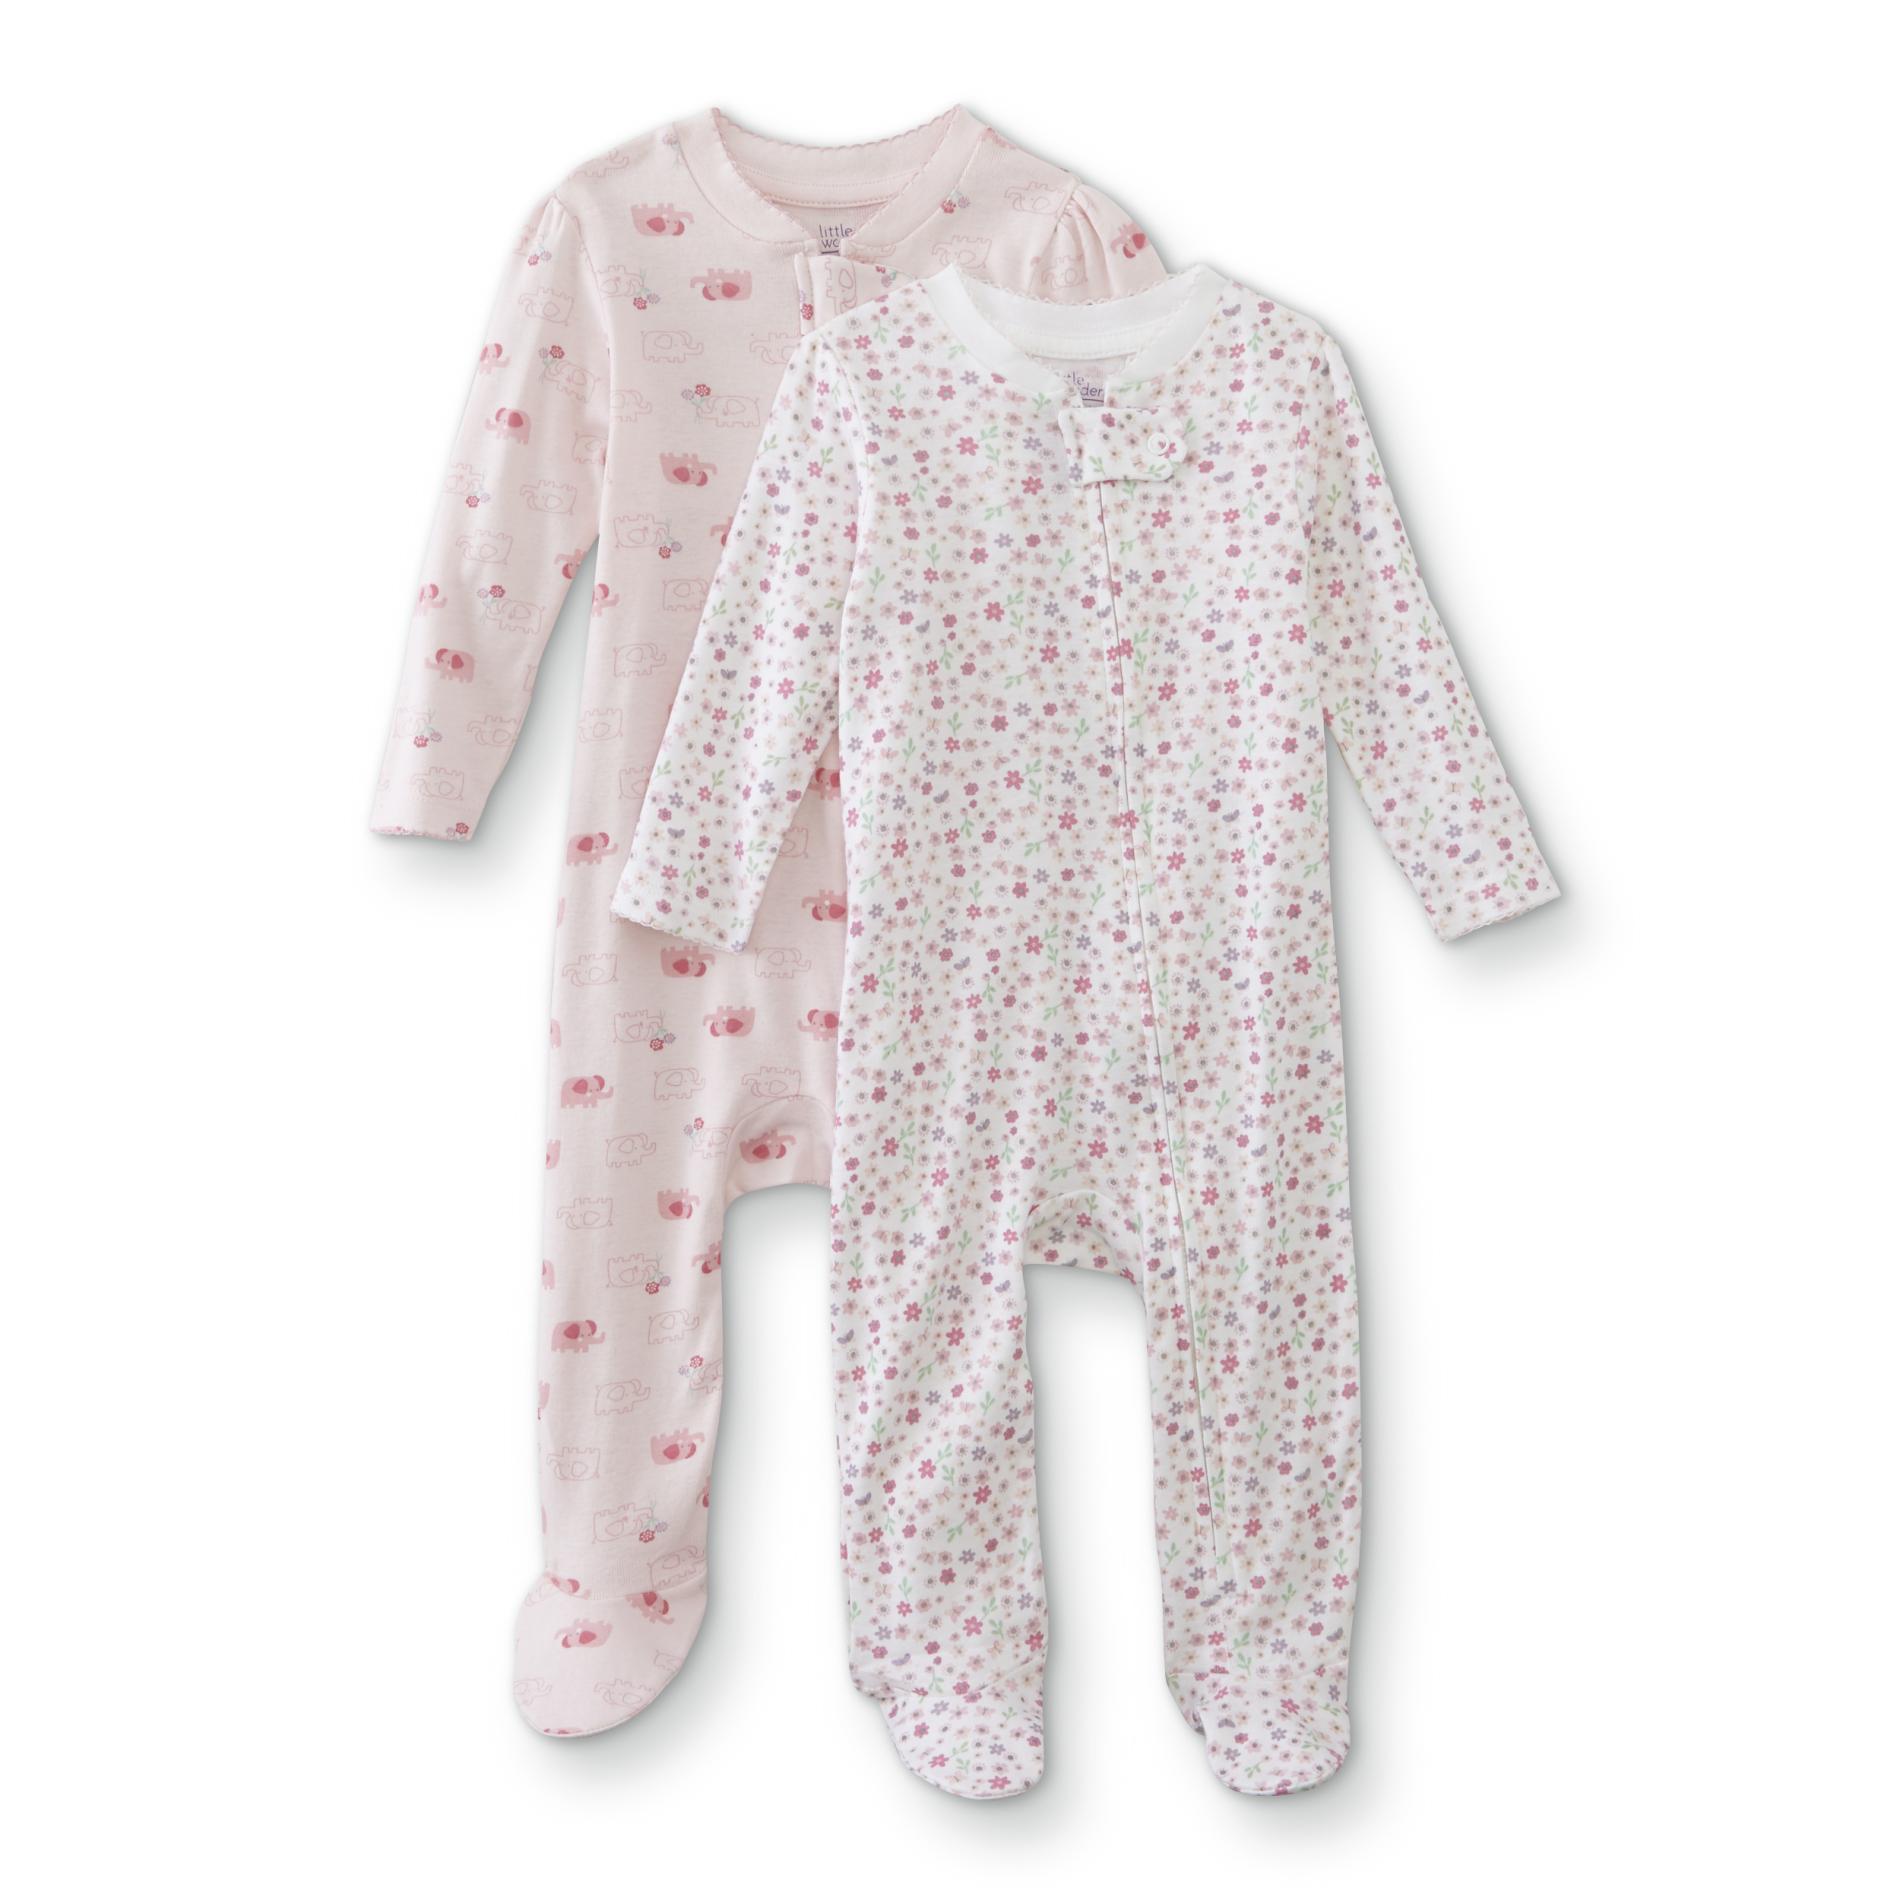 Little Wonders Infant Girls' 2-Pack Sleeper Pajamas - Floral/Elephant